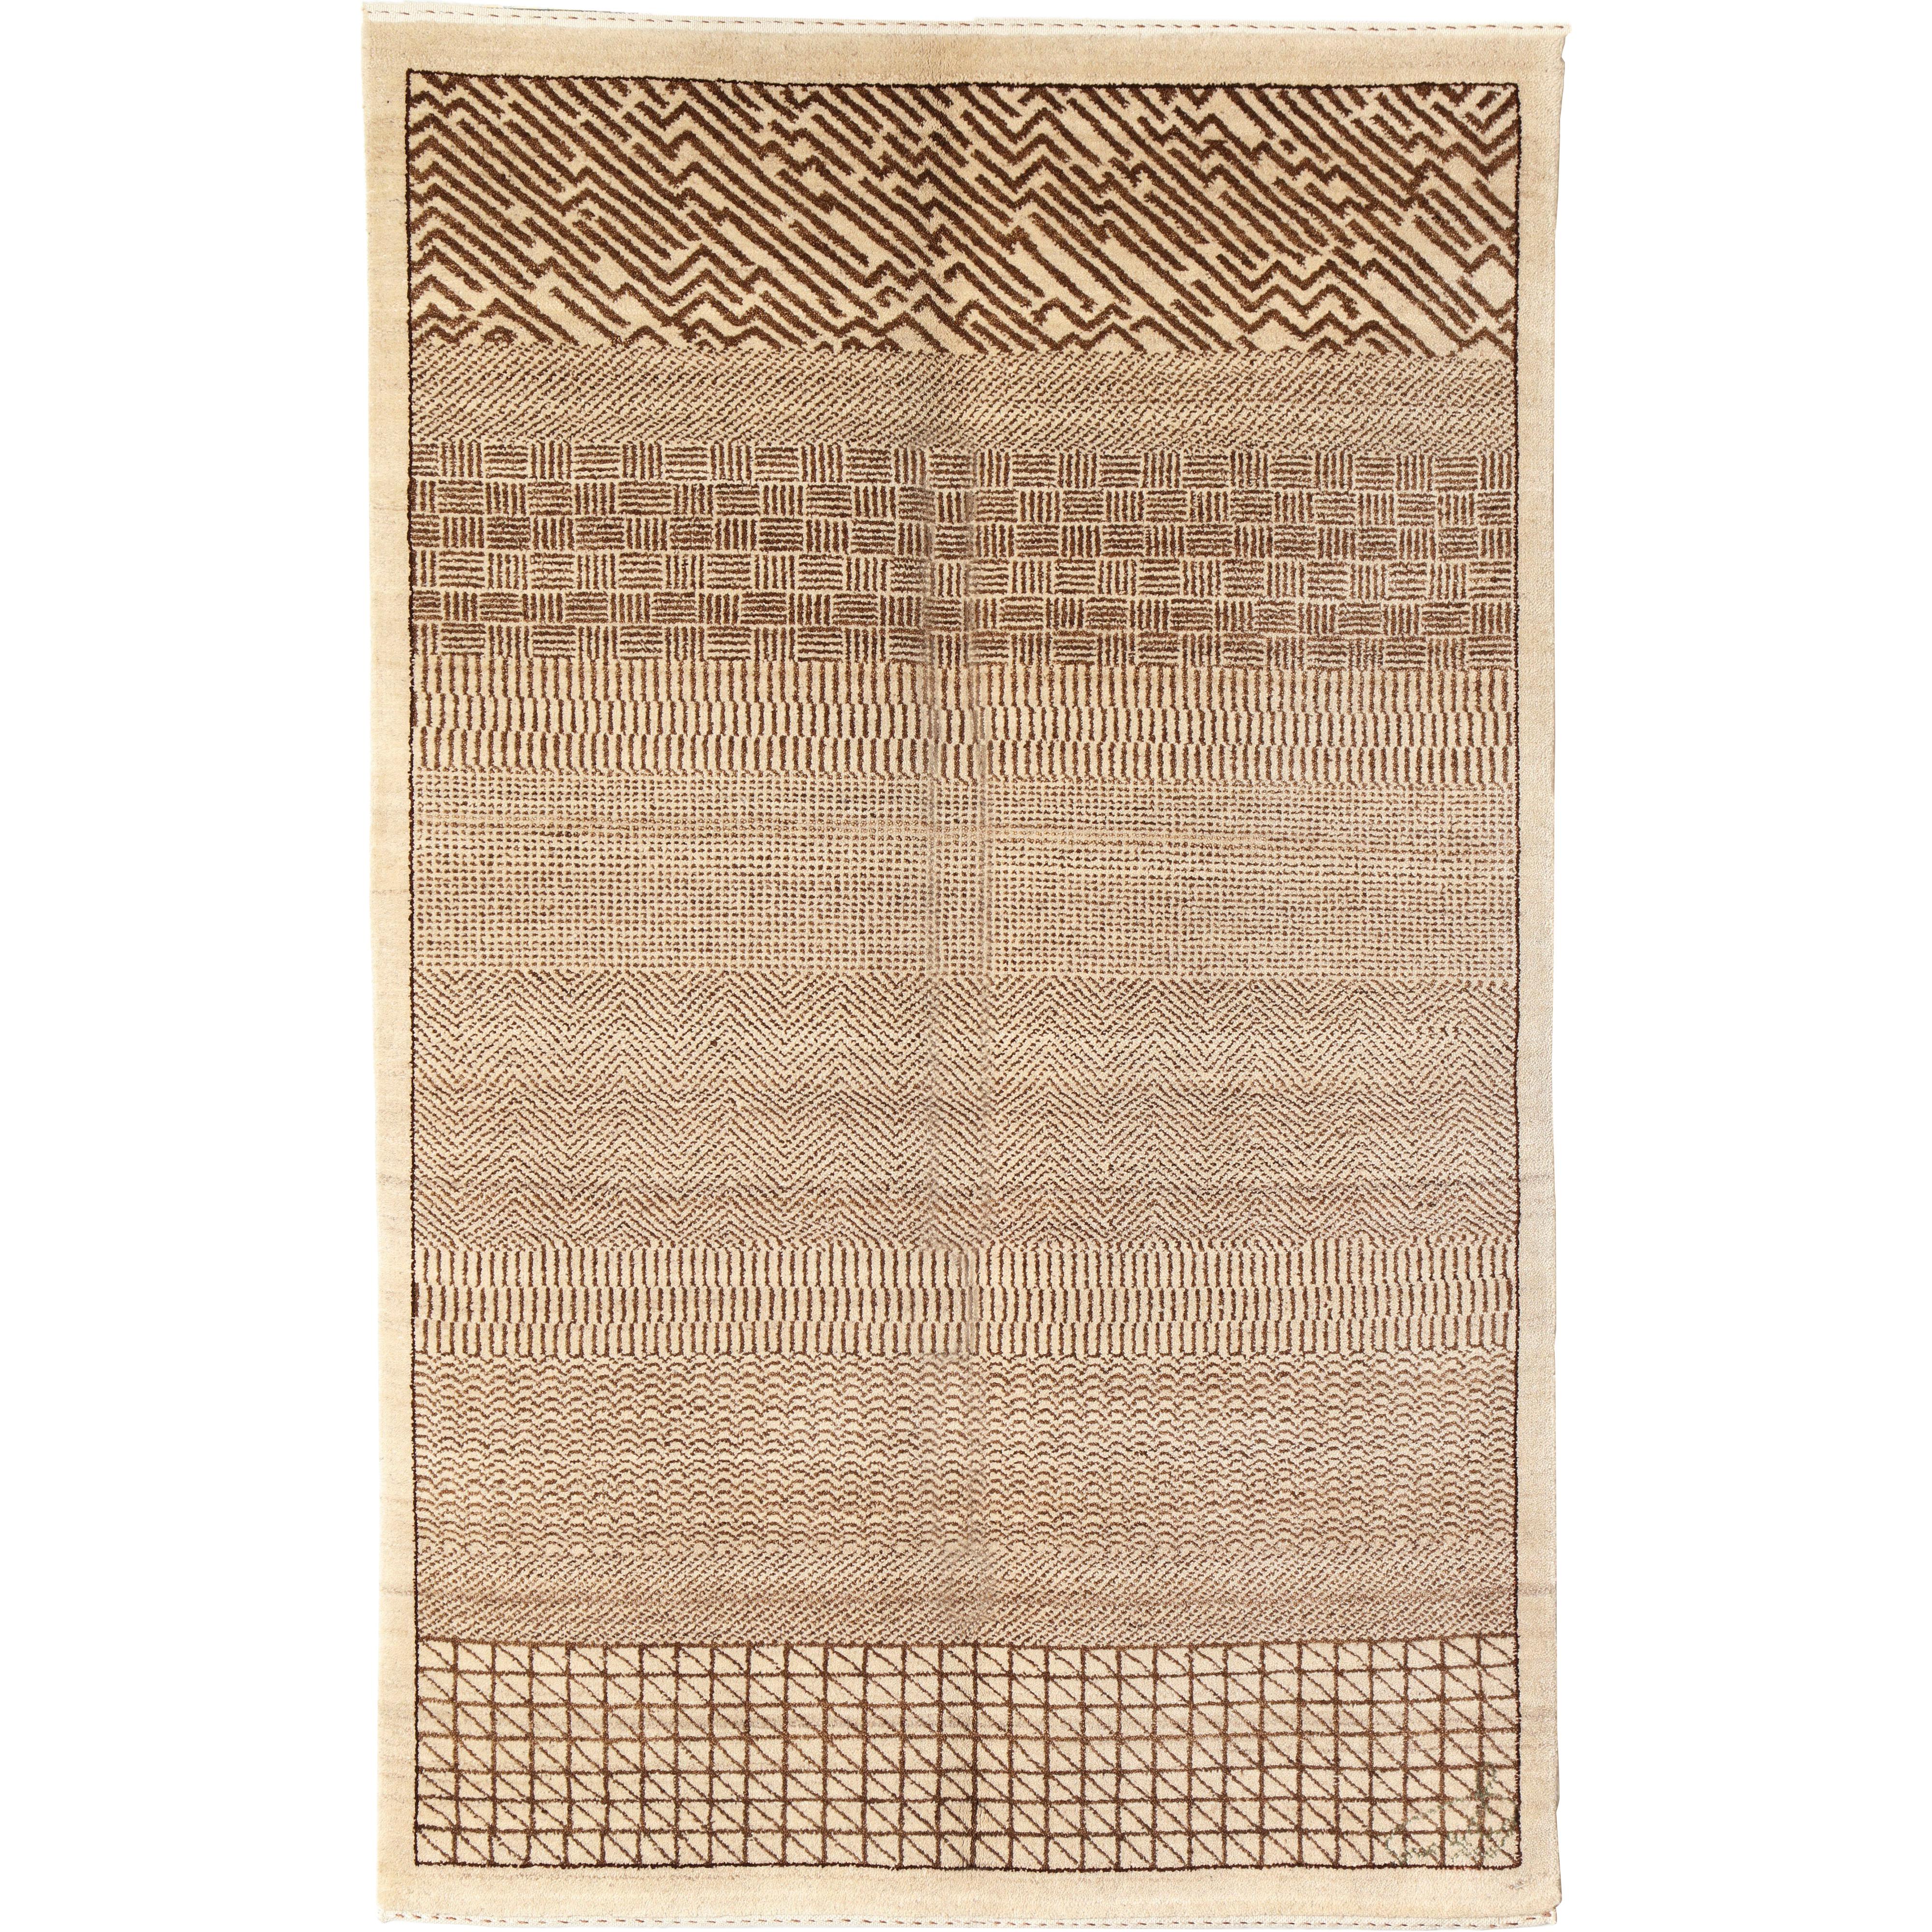 Brown and Cream "Rain" Orley Shabahang Wool Contemporary Persian Carpet, 3' x 5'